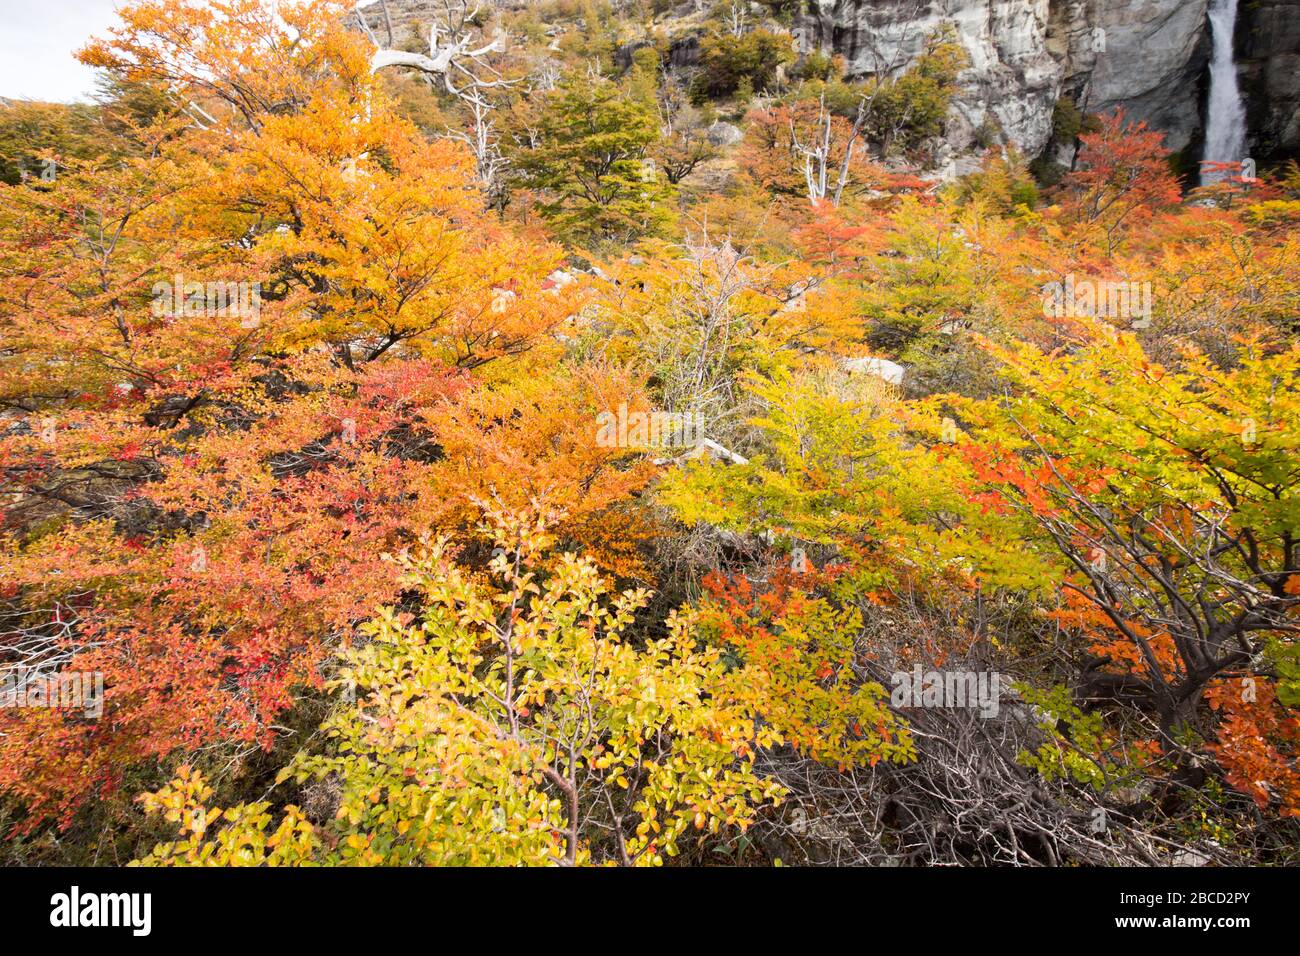 Autumn colors of vegetation around the Chorrillo del Salto waterfall, National Park de los Glaciares, Argentina Stock Photo